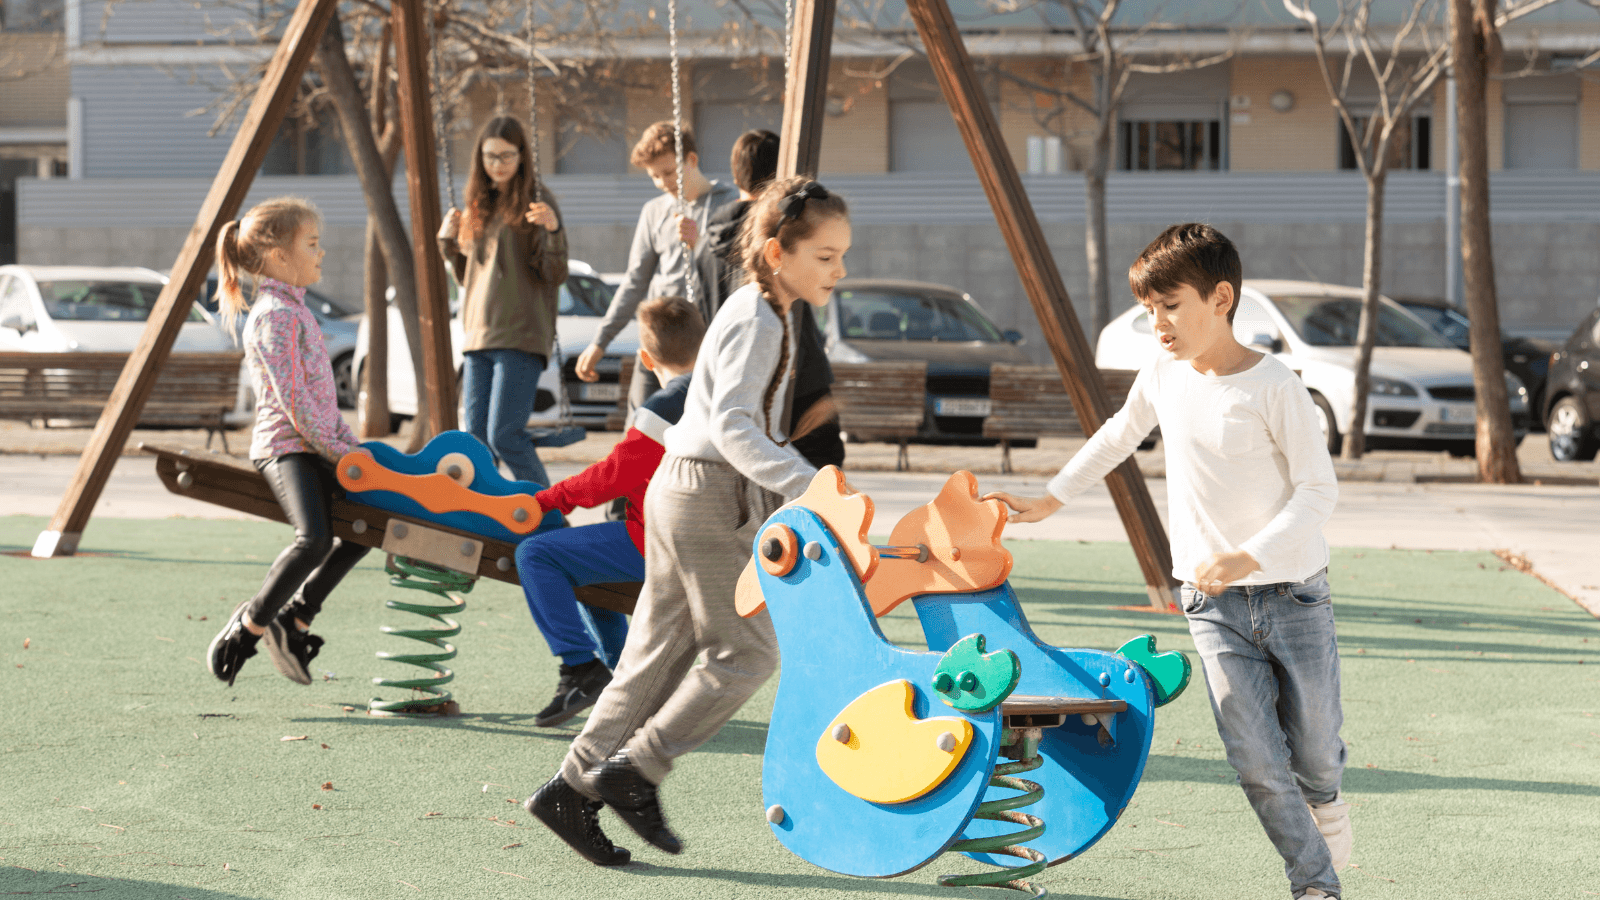 children running around and playing on an outdoor playground set 